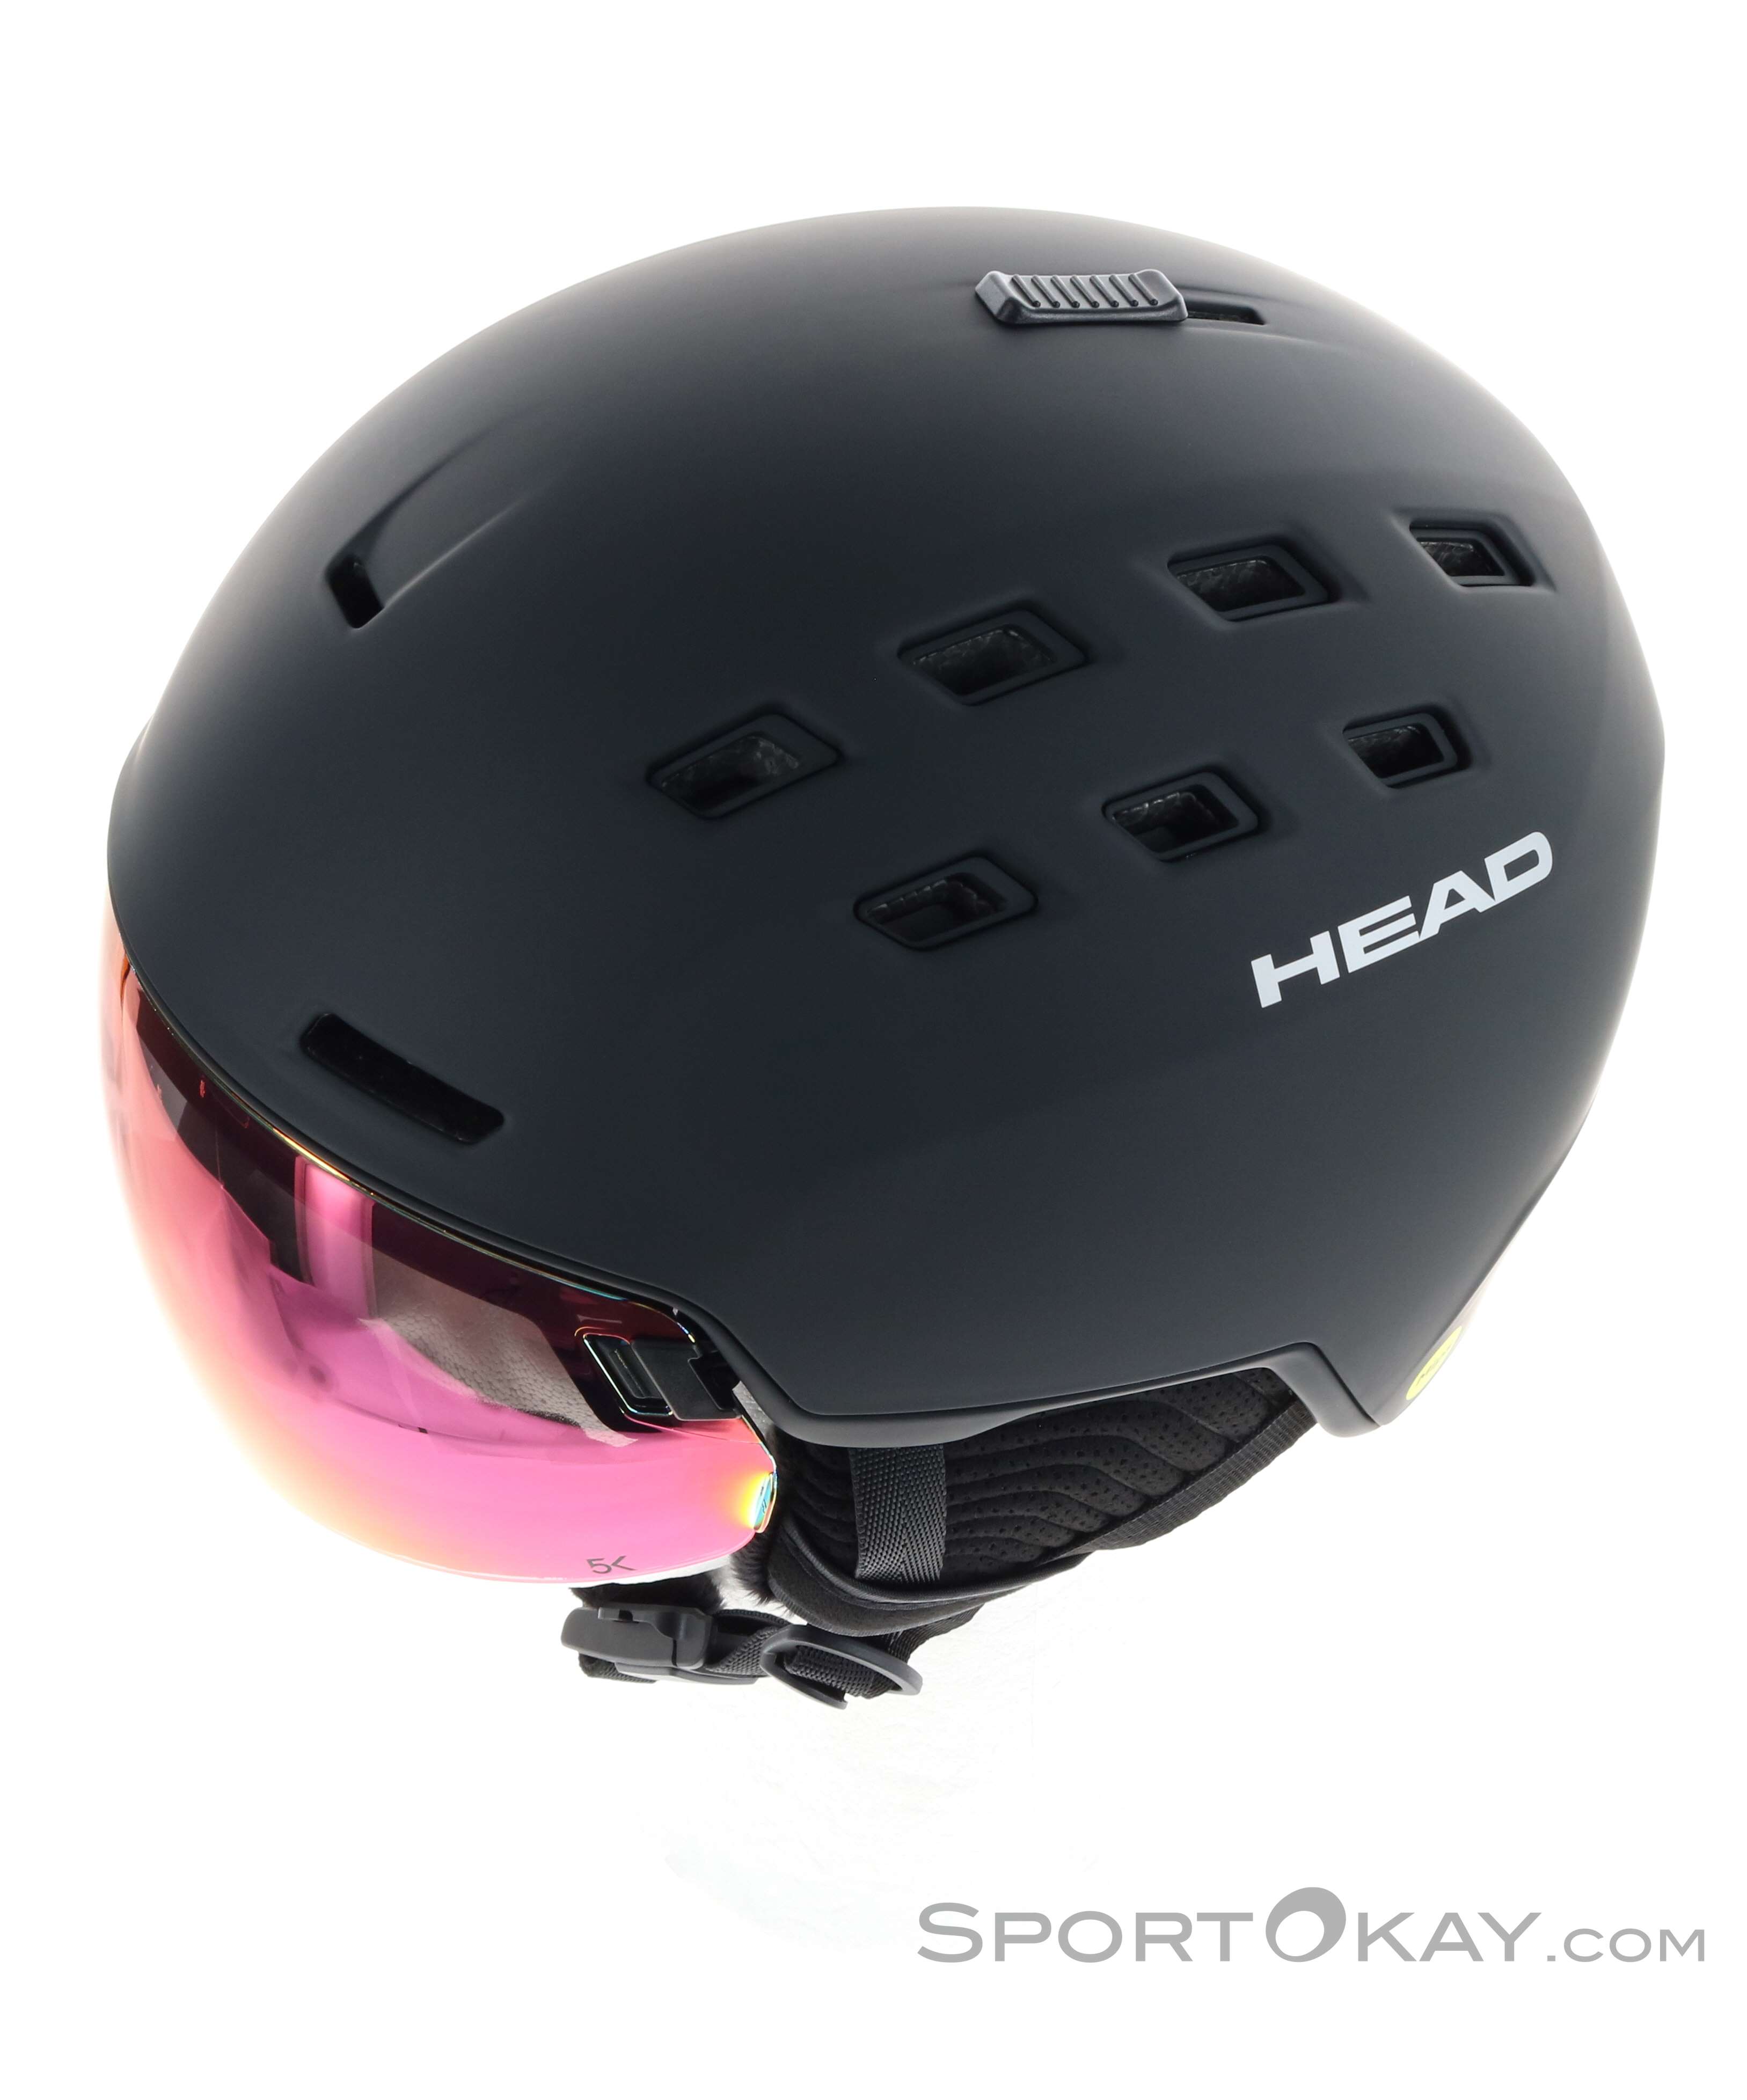 Head Radar 5K MIPS Ski Helmet with Visor - Ski Helmets - Ski